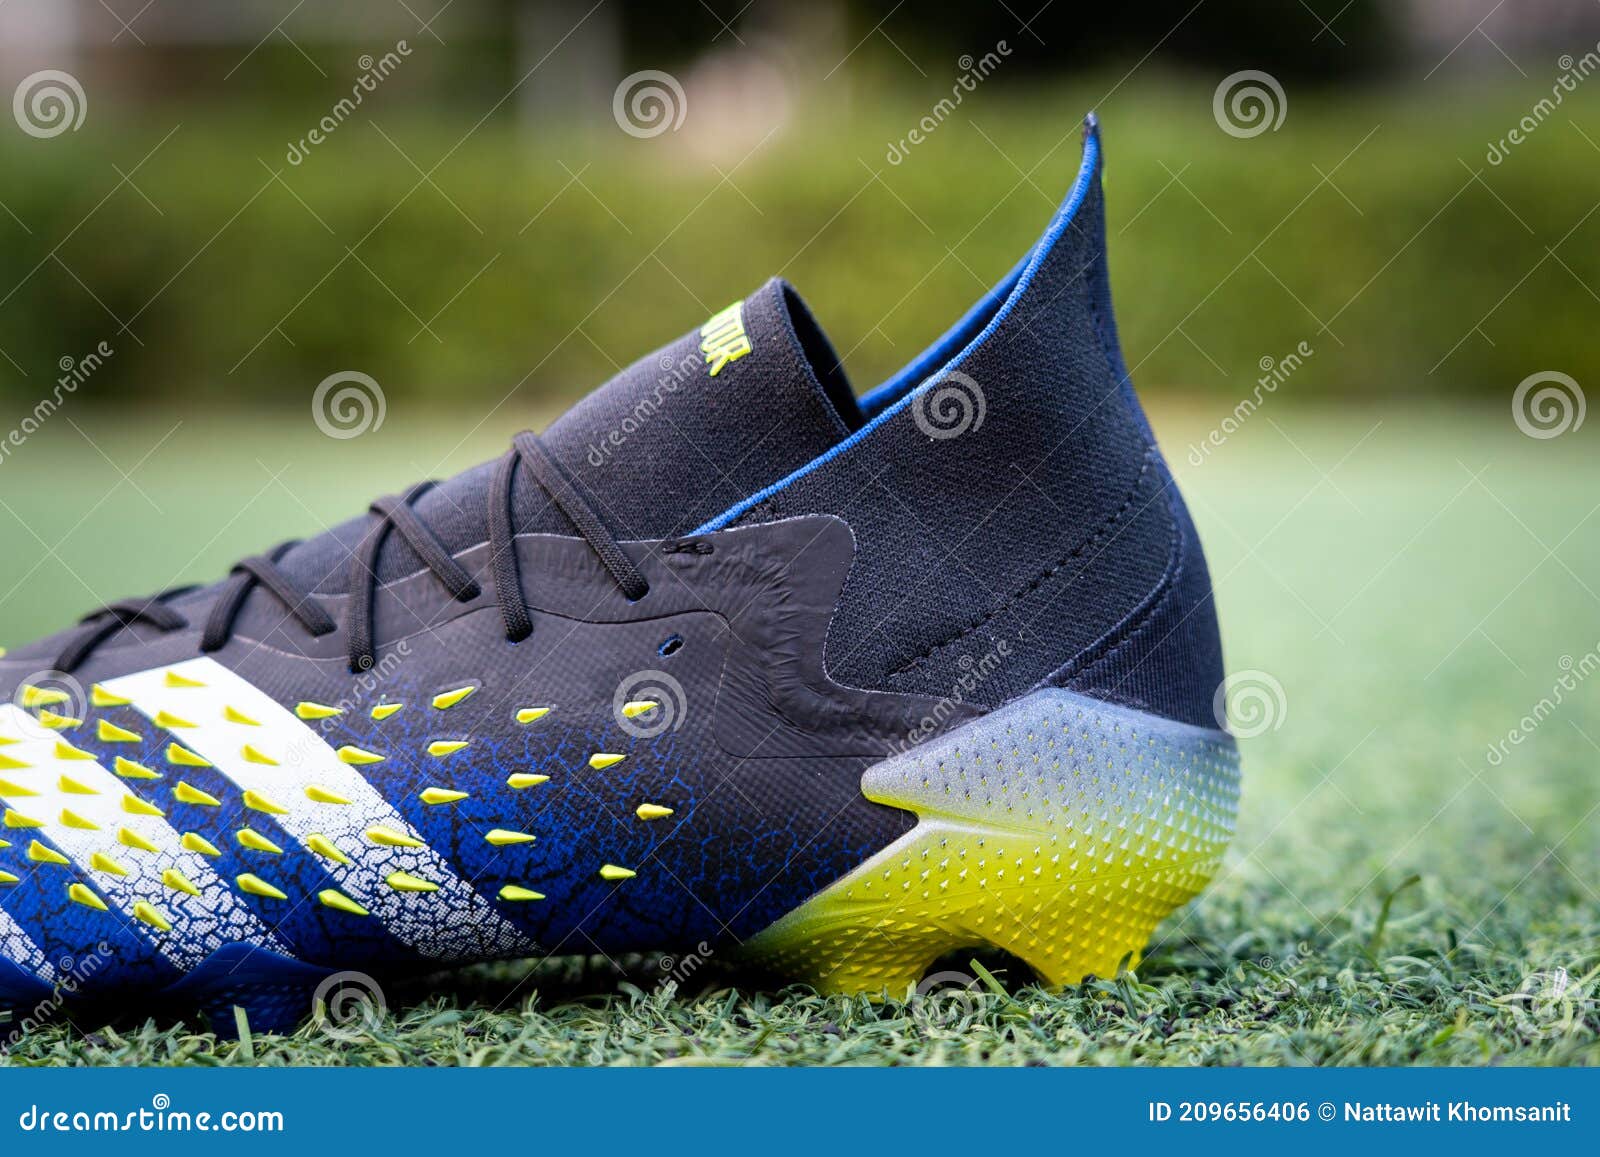 adidas football new boots